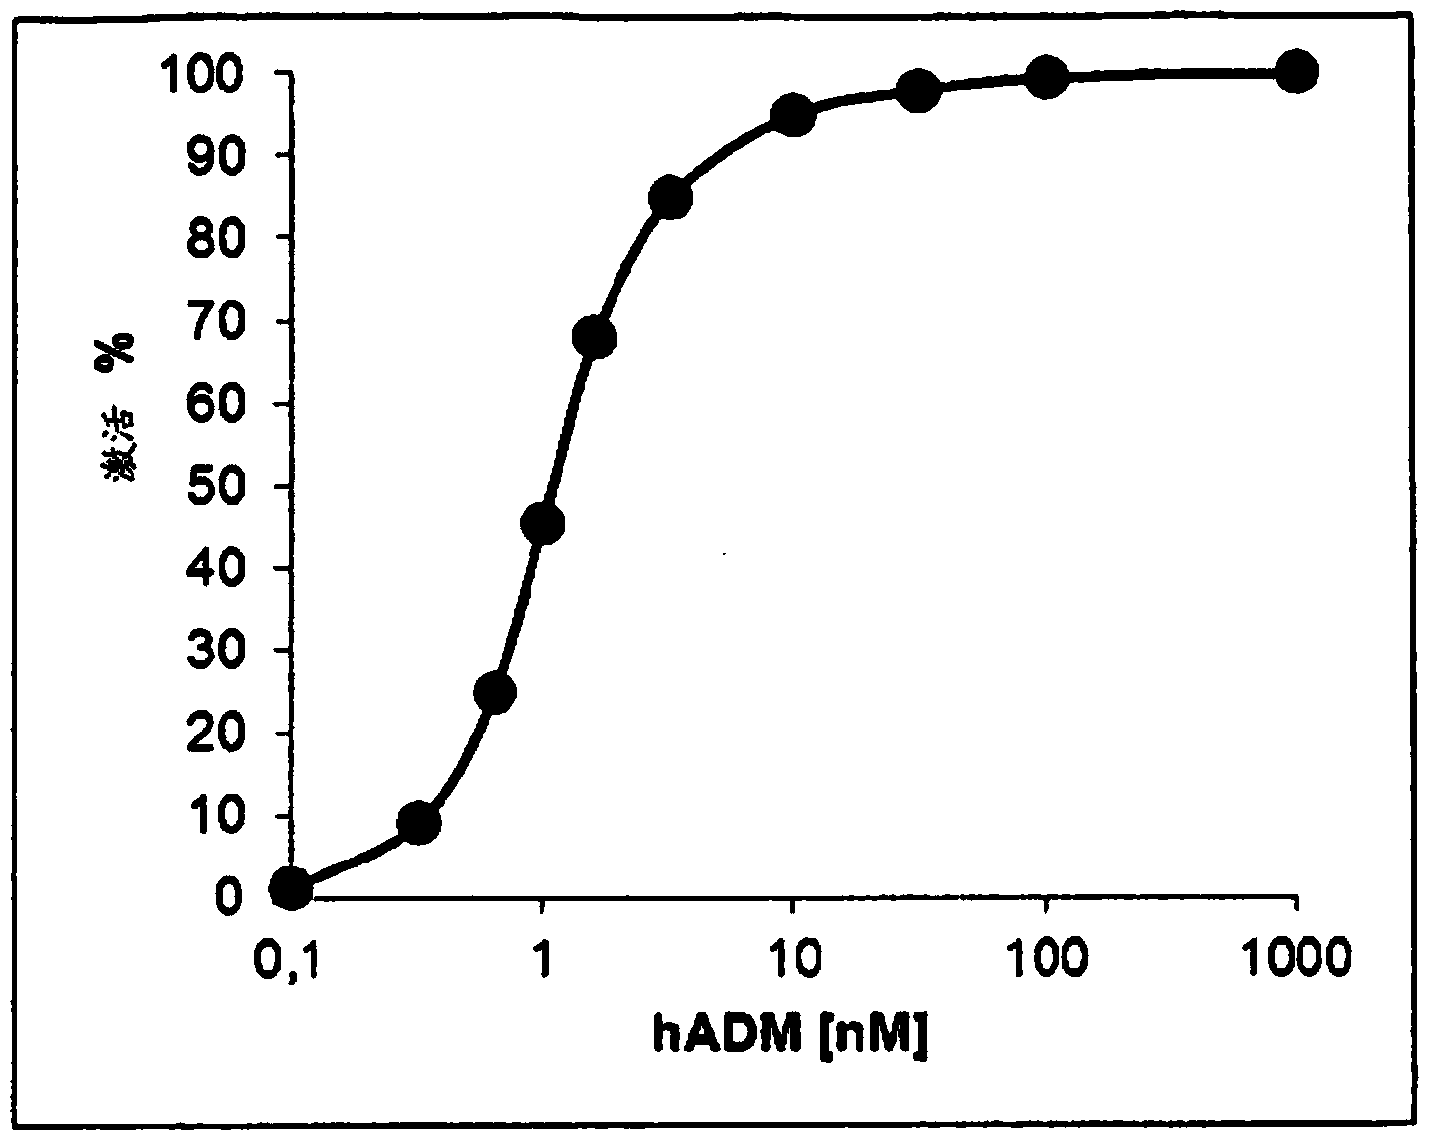 Anti-Adrenomedullin (ADM) antibody or anti-ADM antibody fragment or an anti-ADM non-Ig protein scaffold for use in therapy